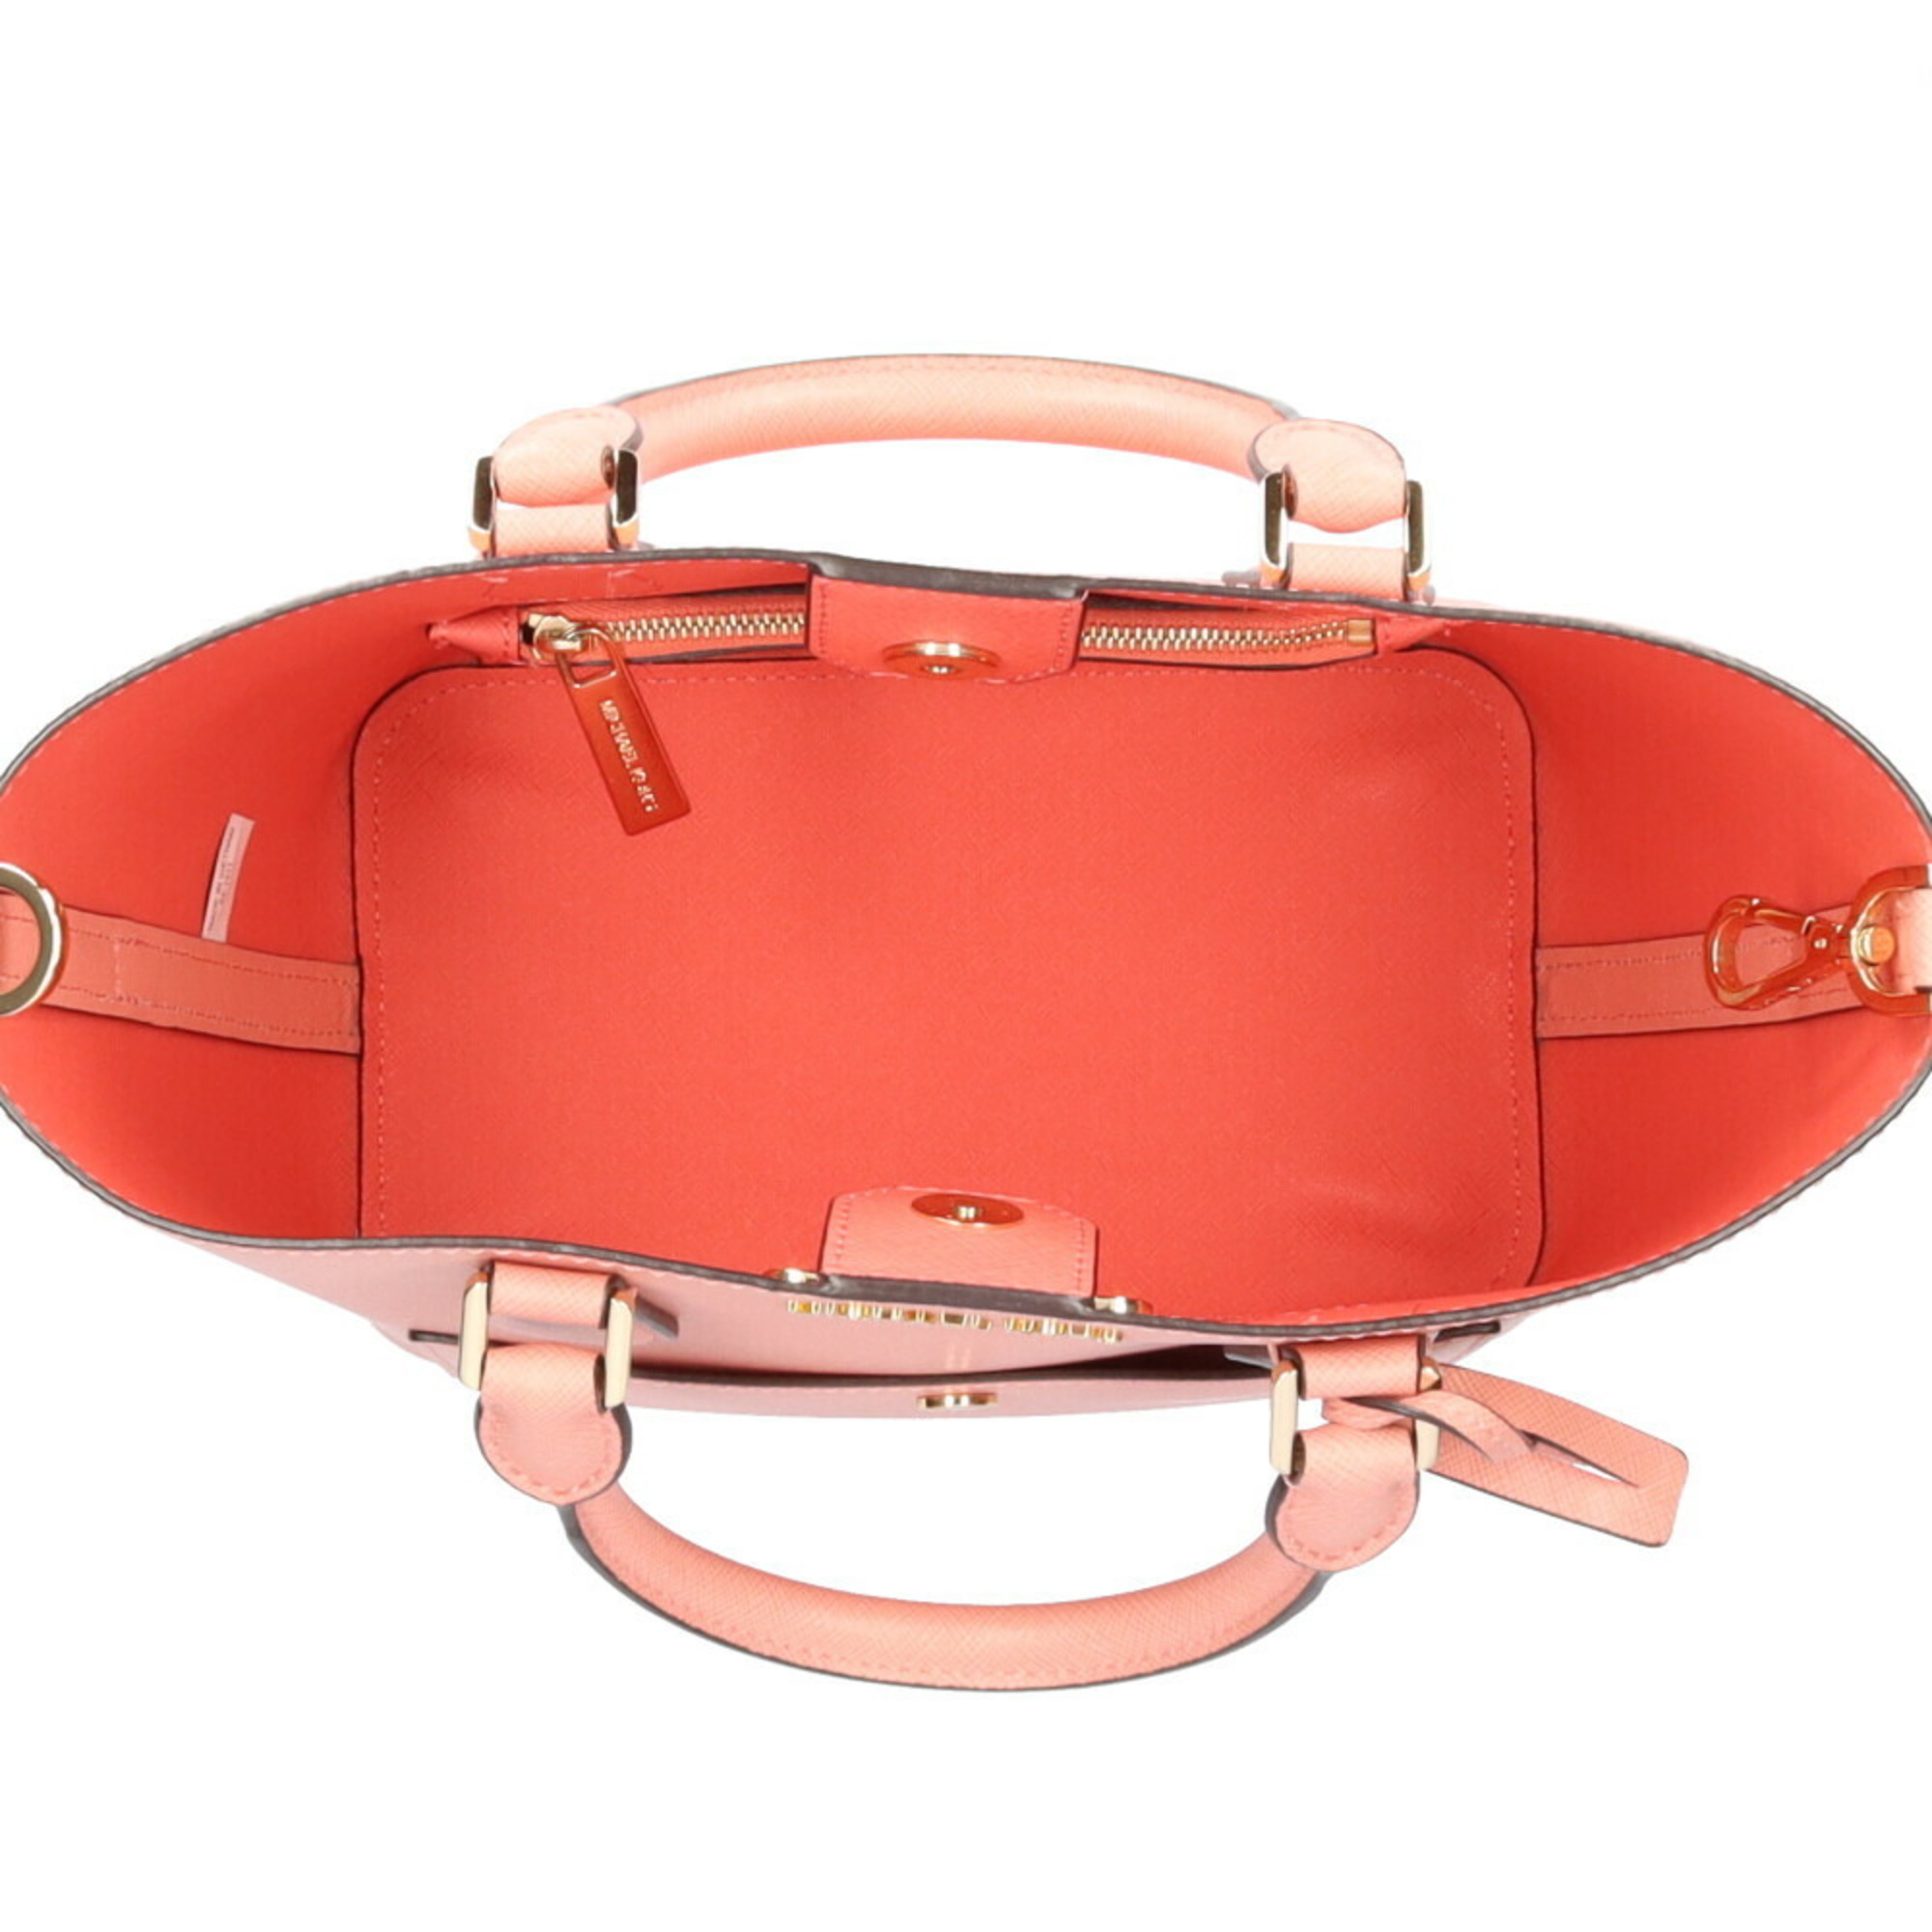 Michael Kors shoulder bag leather pink ladies